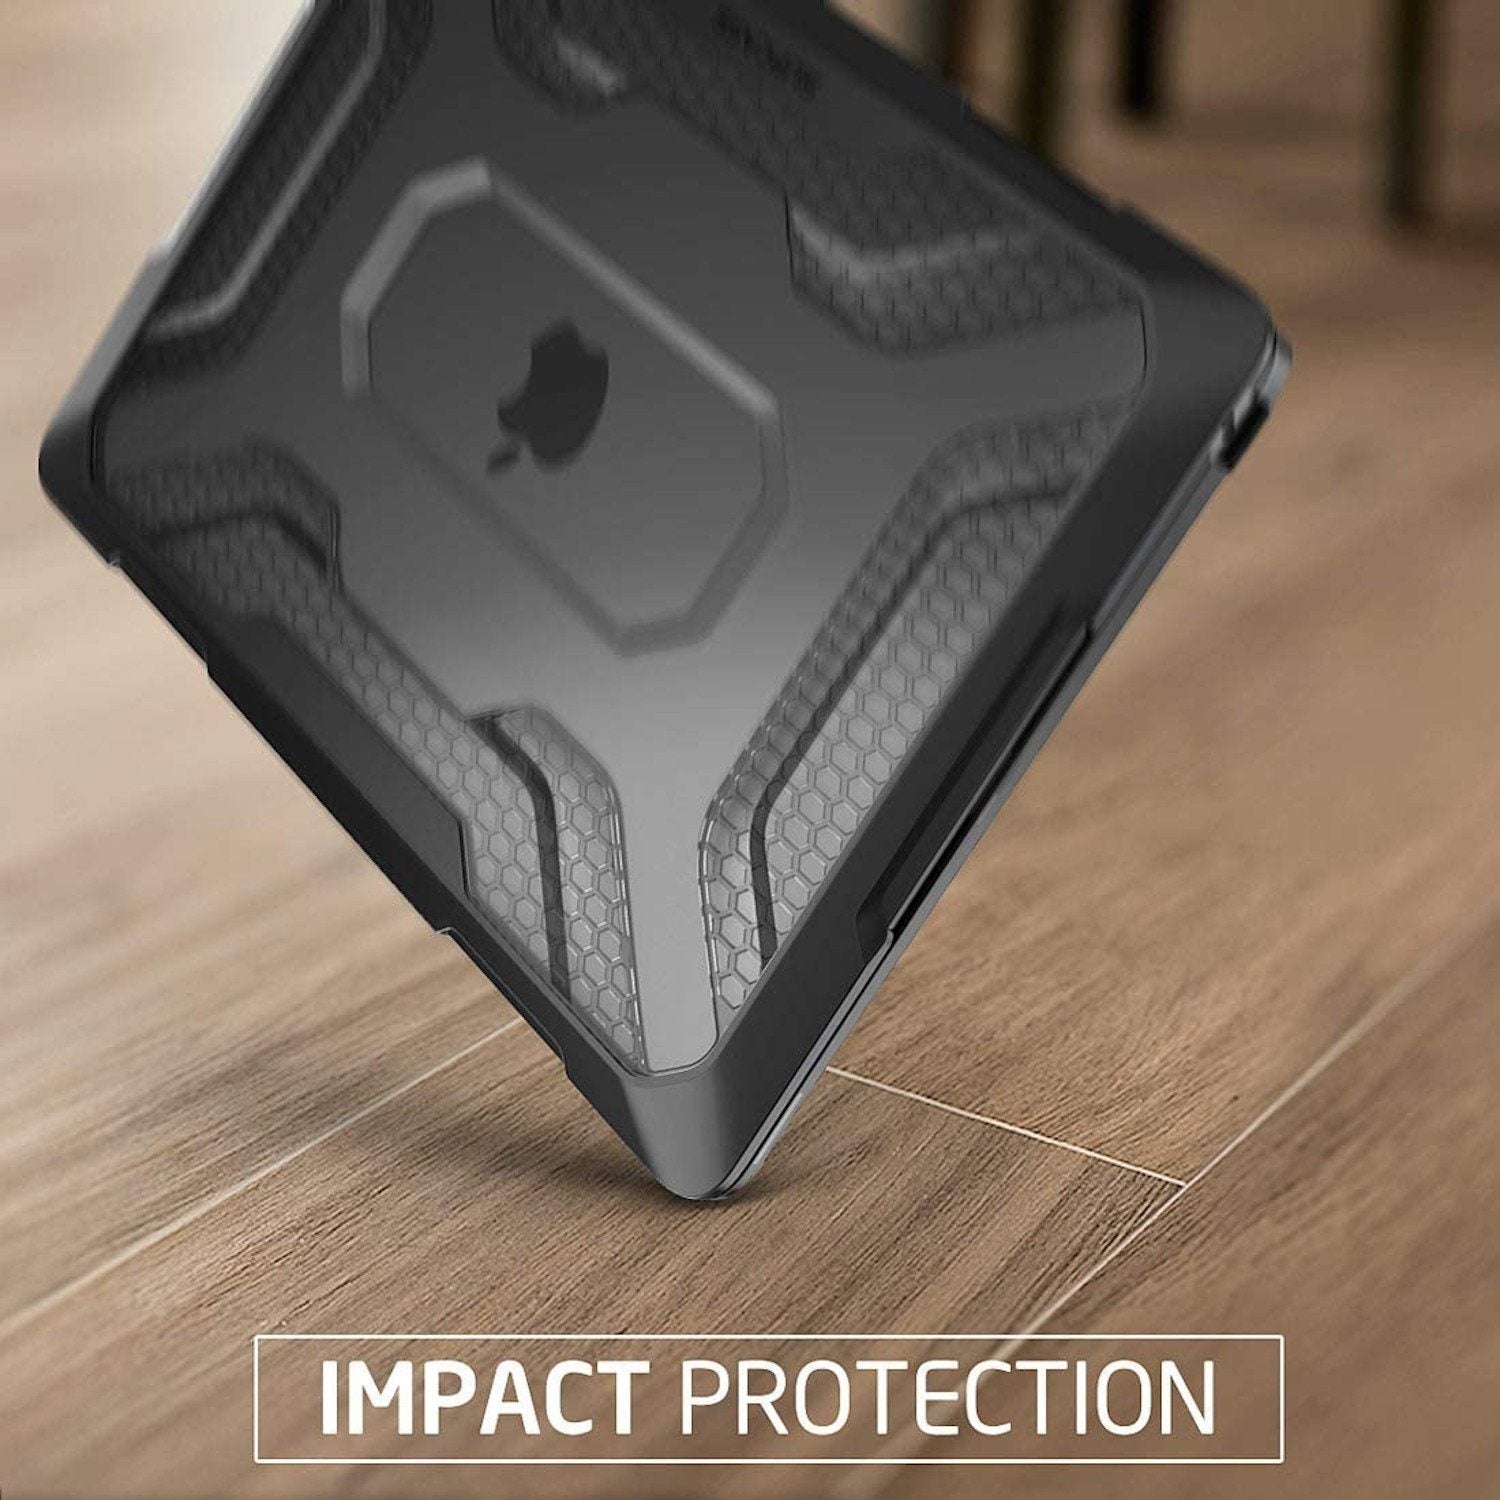 Supcase UB Series Hybrid Protective Case for Macbook Pro 13"(2018, 2017, 2016), Frost/Black Macbook Case Supcase 